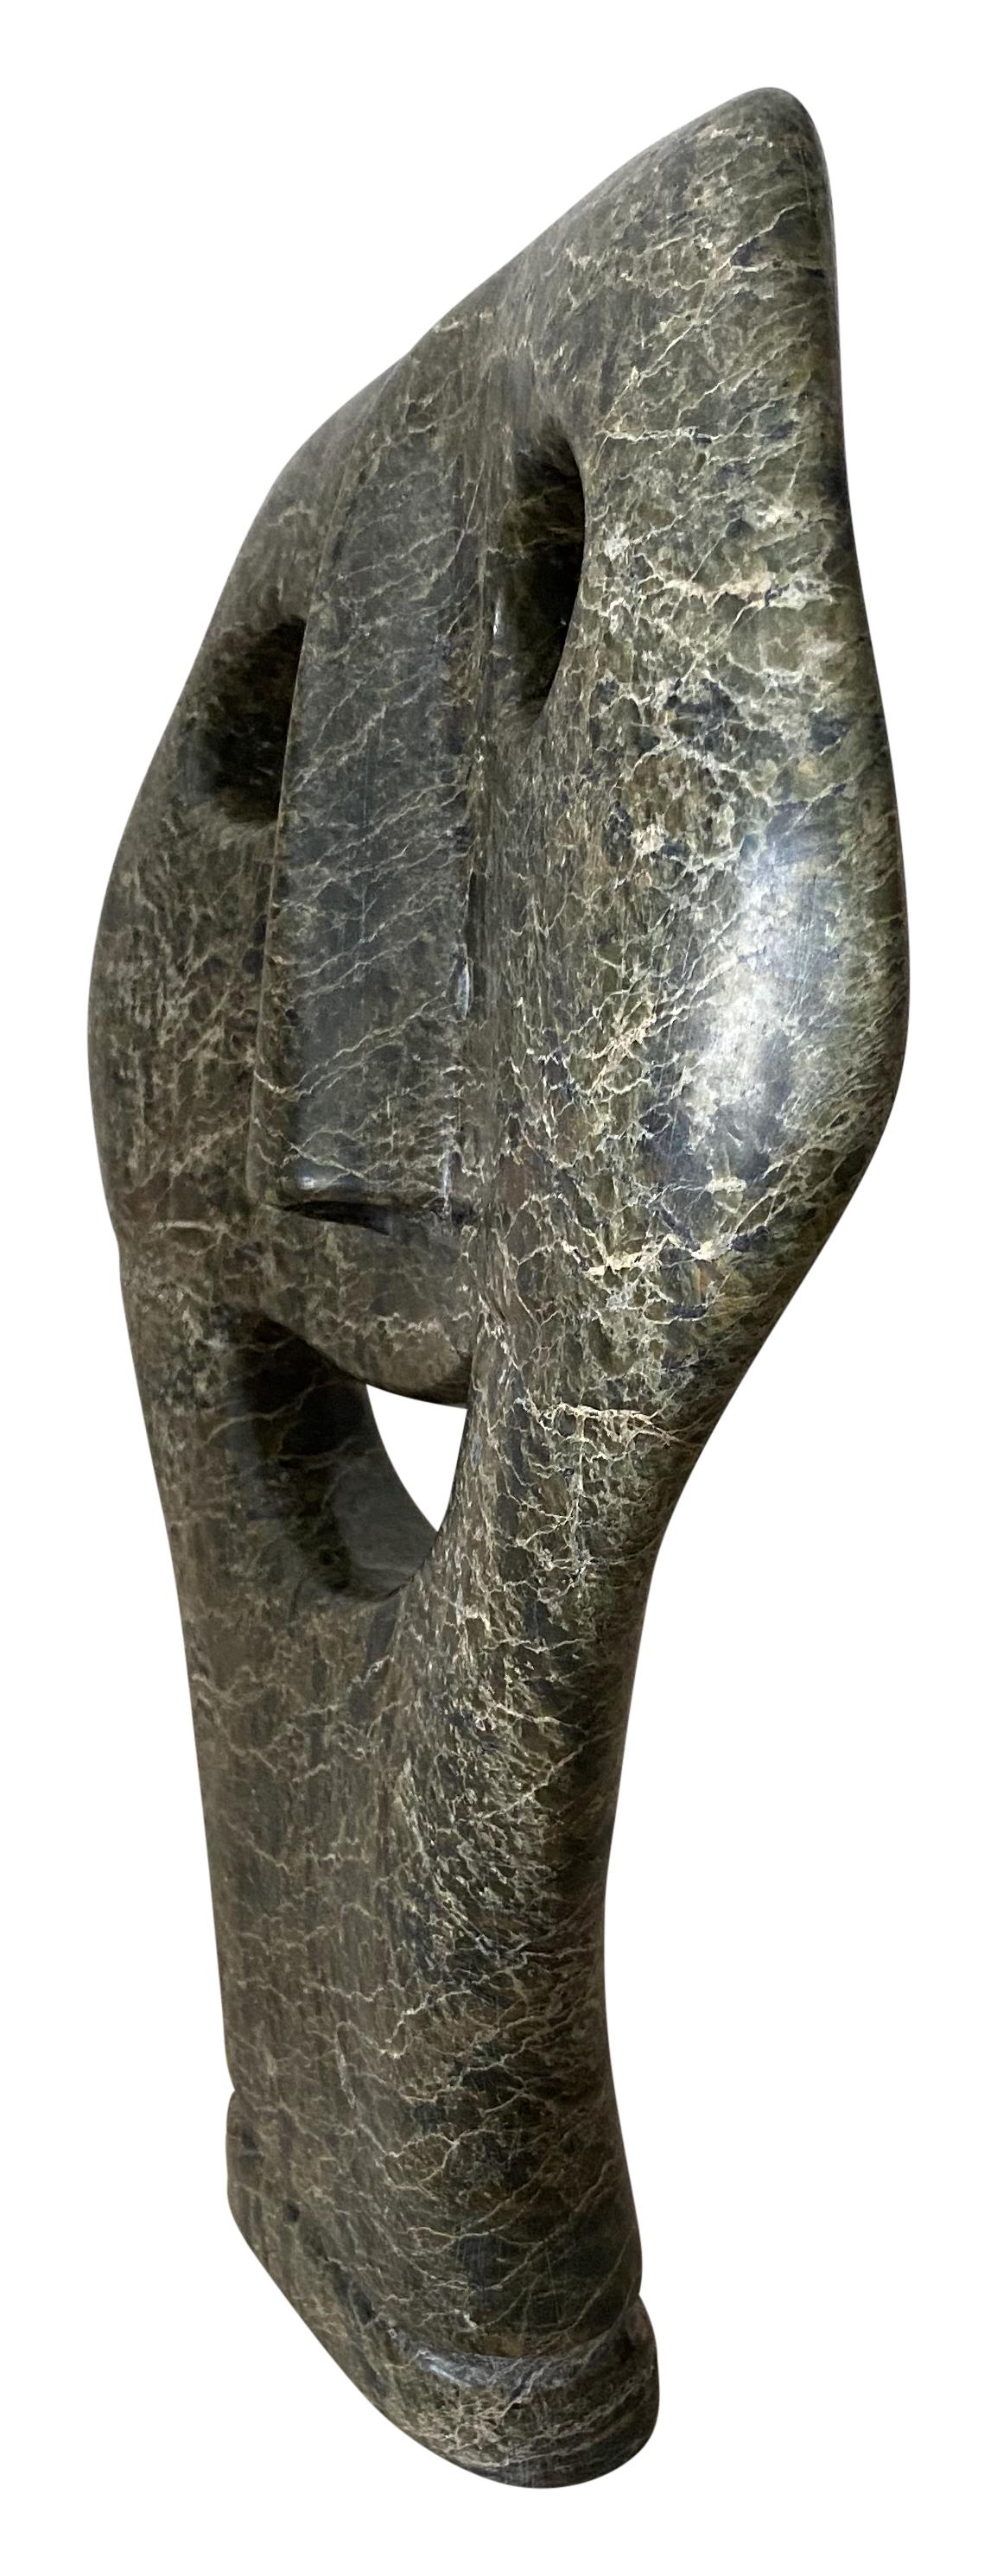 Intuit carved greenstone mask figurative sculpture.